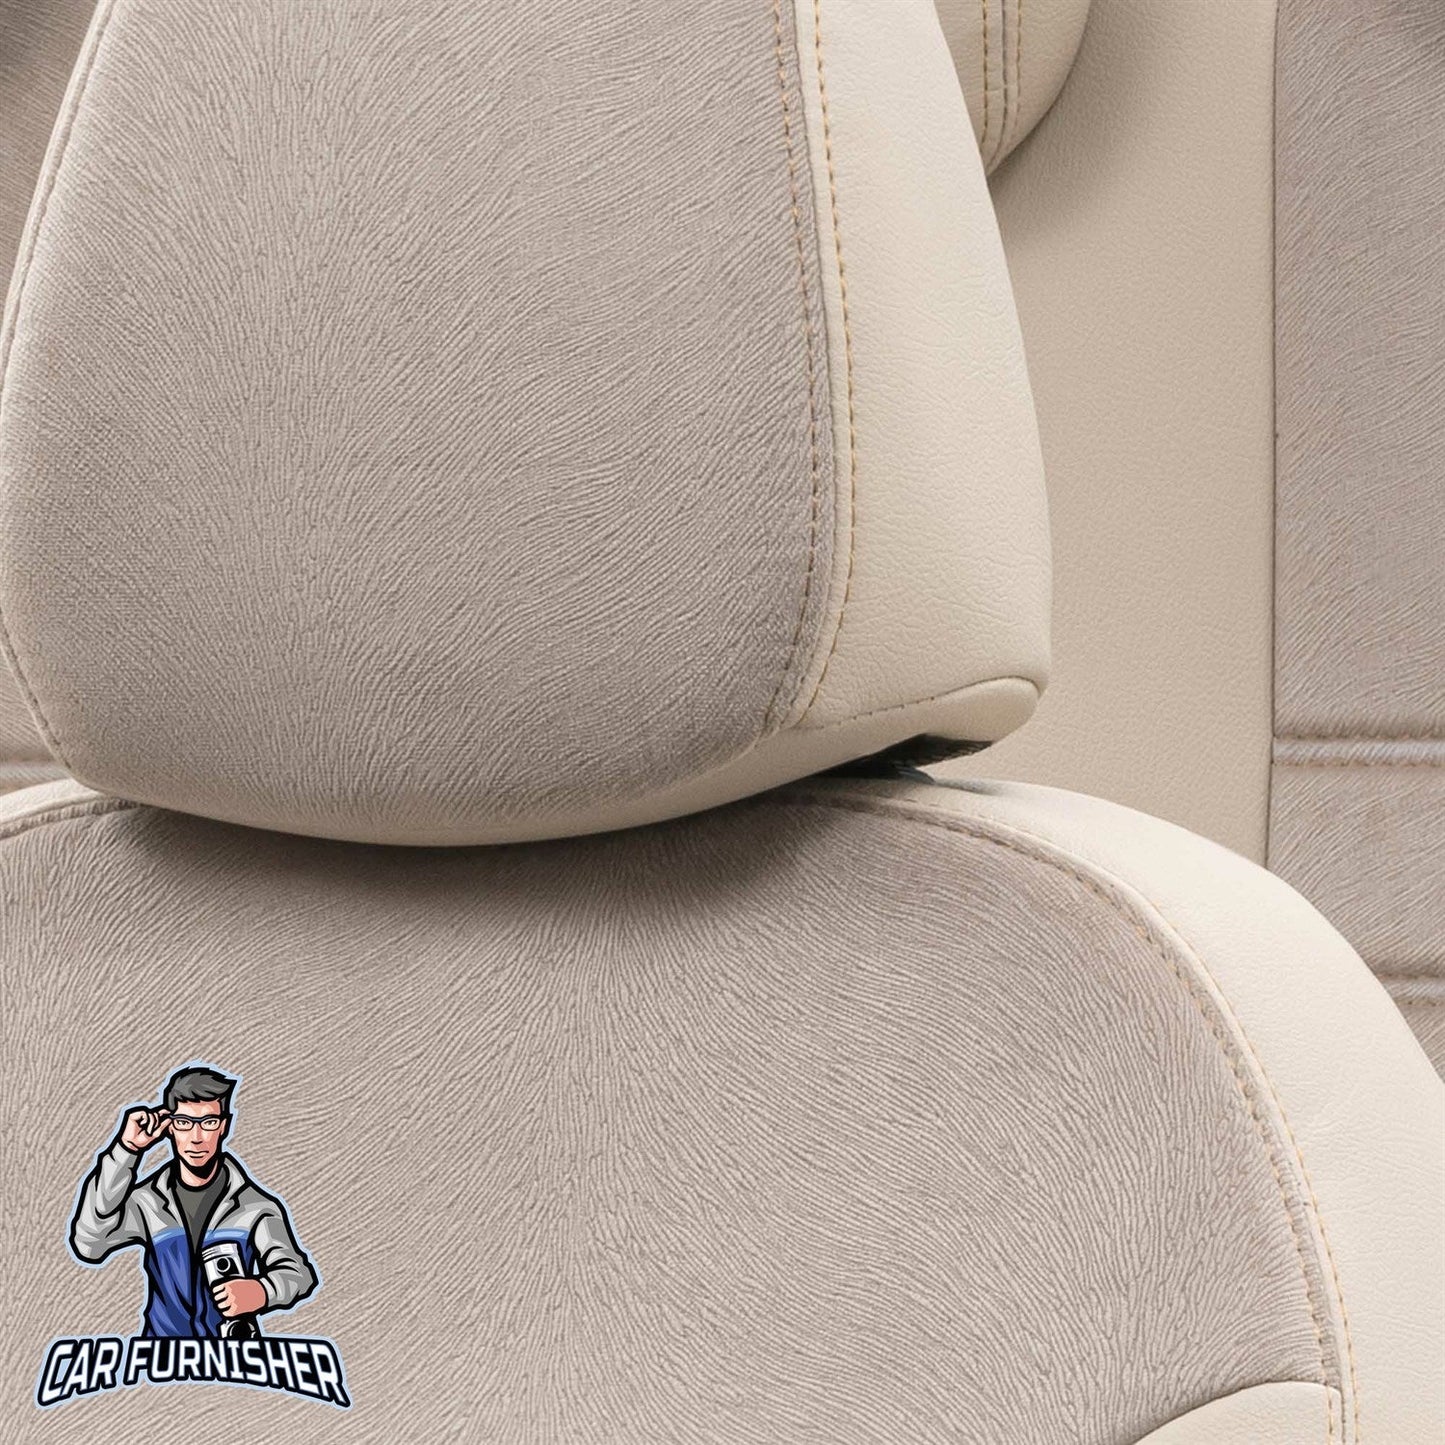 Dacia Sandero Seat Covers London Foal Feather Design Beige Leather & Foal Feather